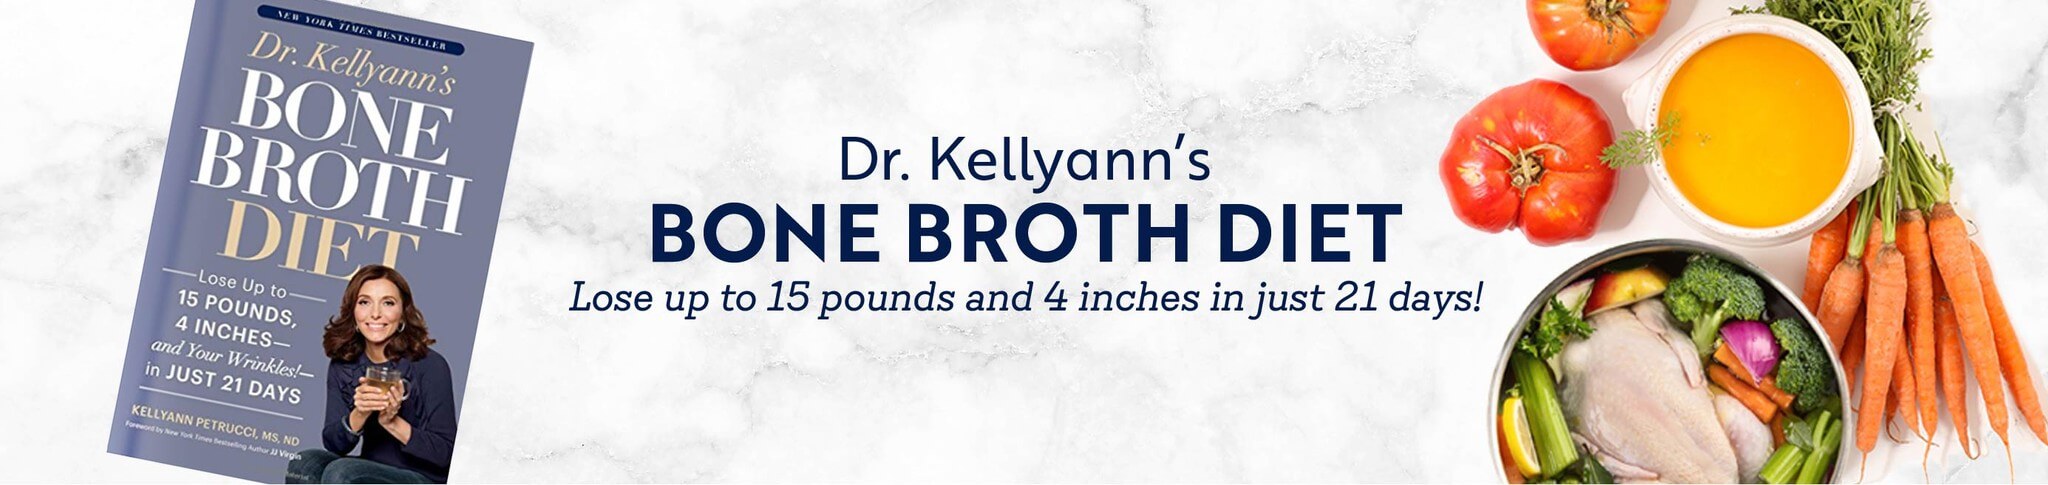 Dr.-Kellyann-Petrucci-The-Bone-Broth-Diet-eCourse1